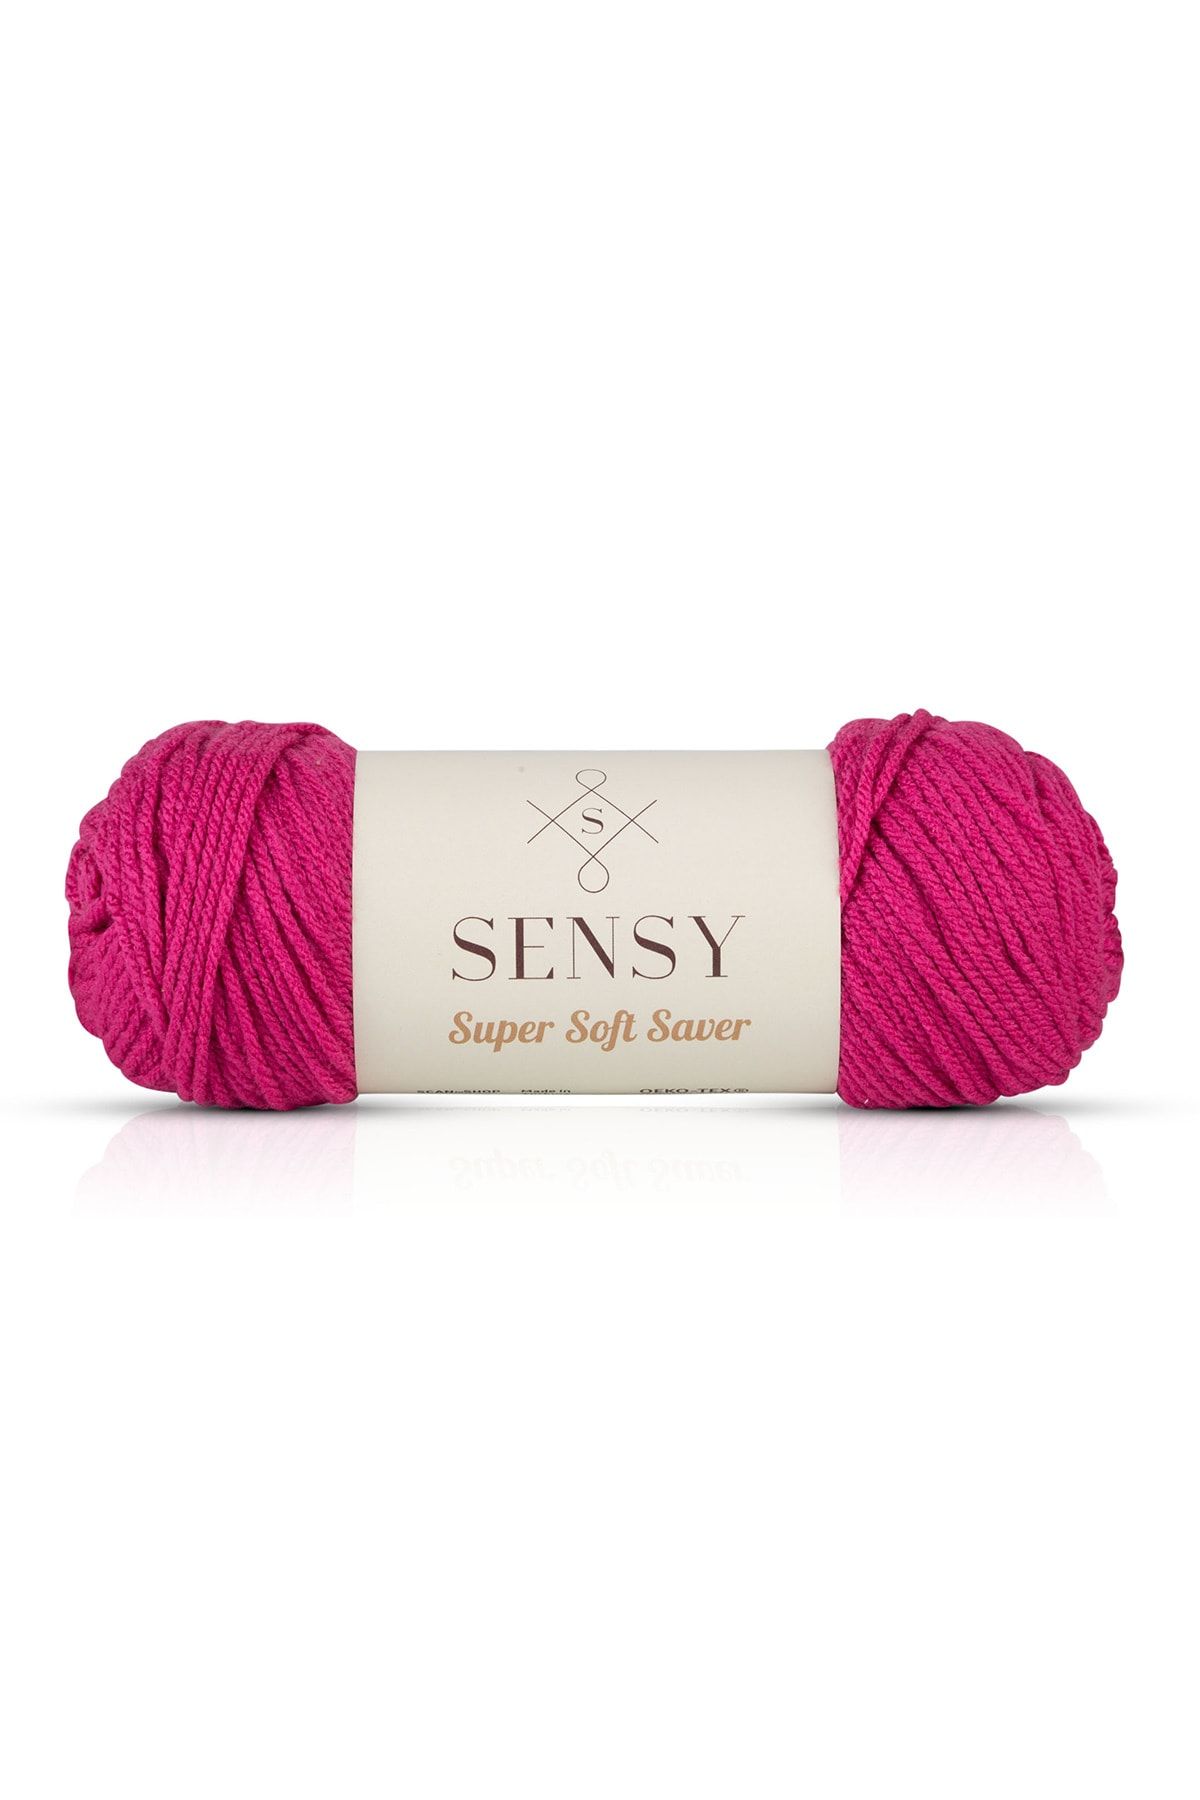 SENSY Premium Super Soft Saver El Örgü Ipi Hırka Kazak Ip Şal Ipi Battaniye Ev Dekorasyon Ipi Fuşya